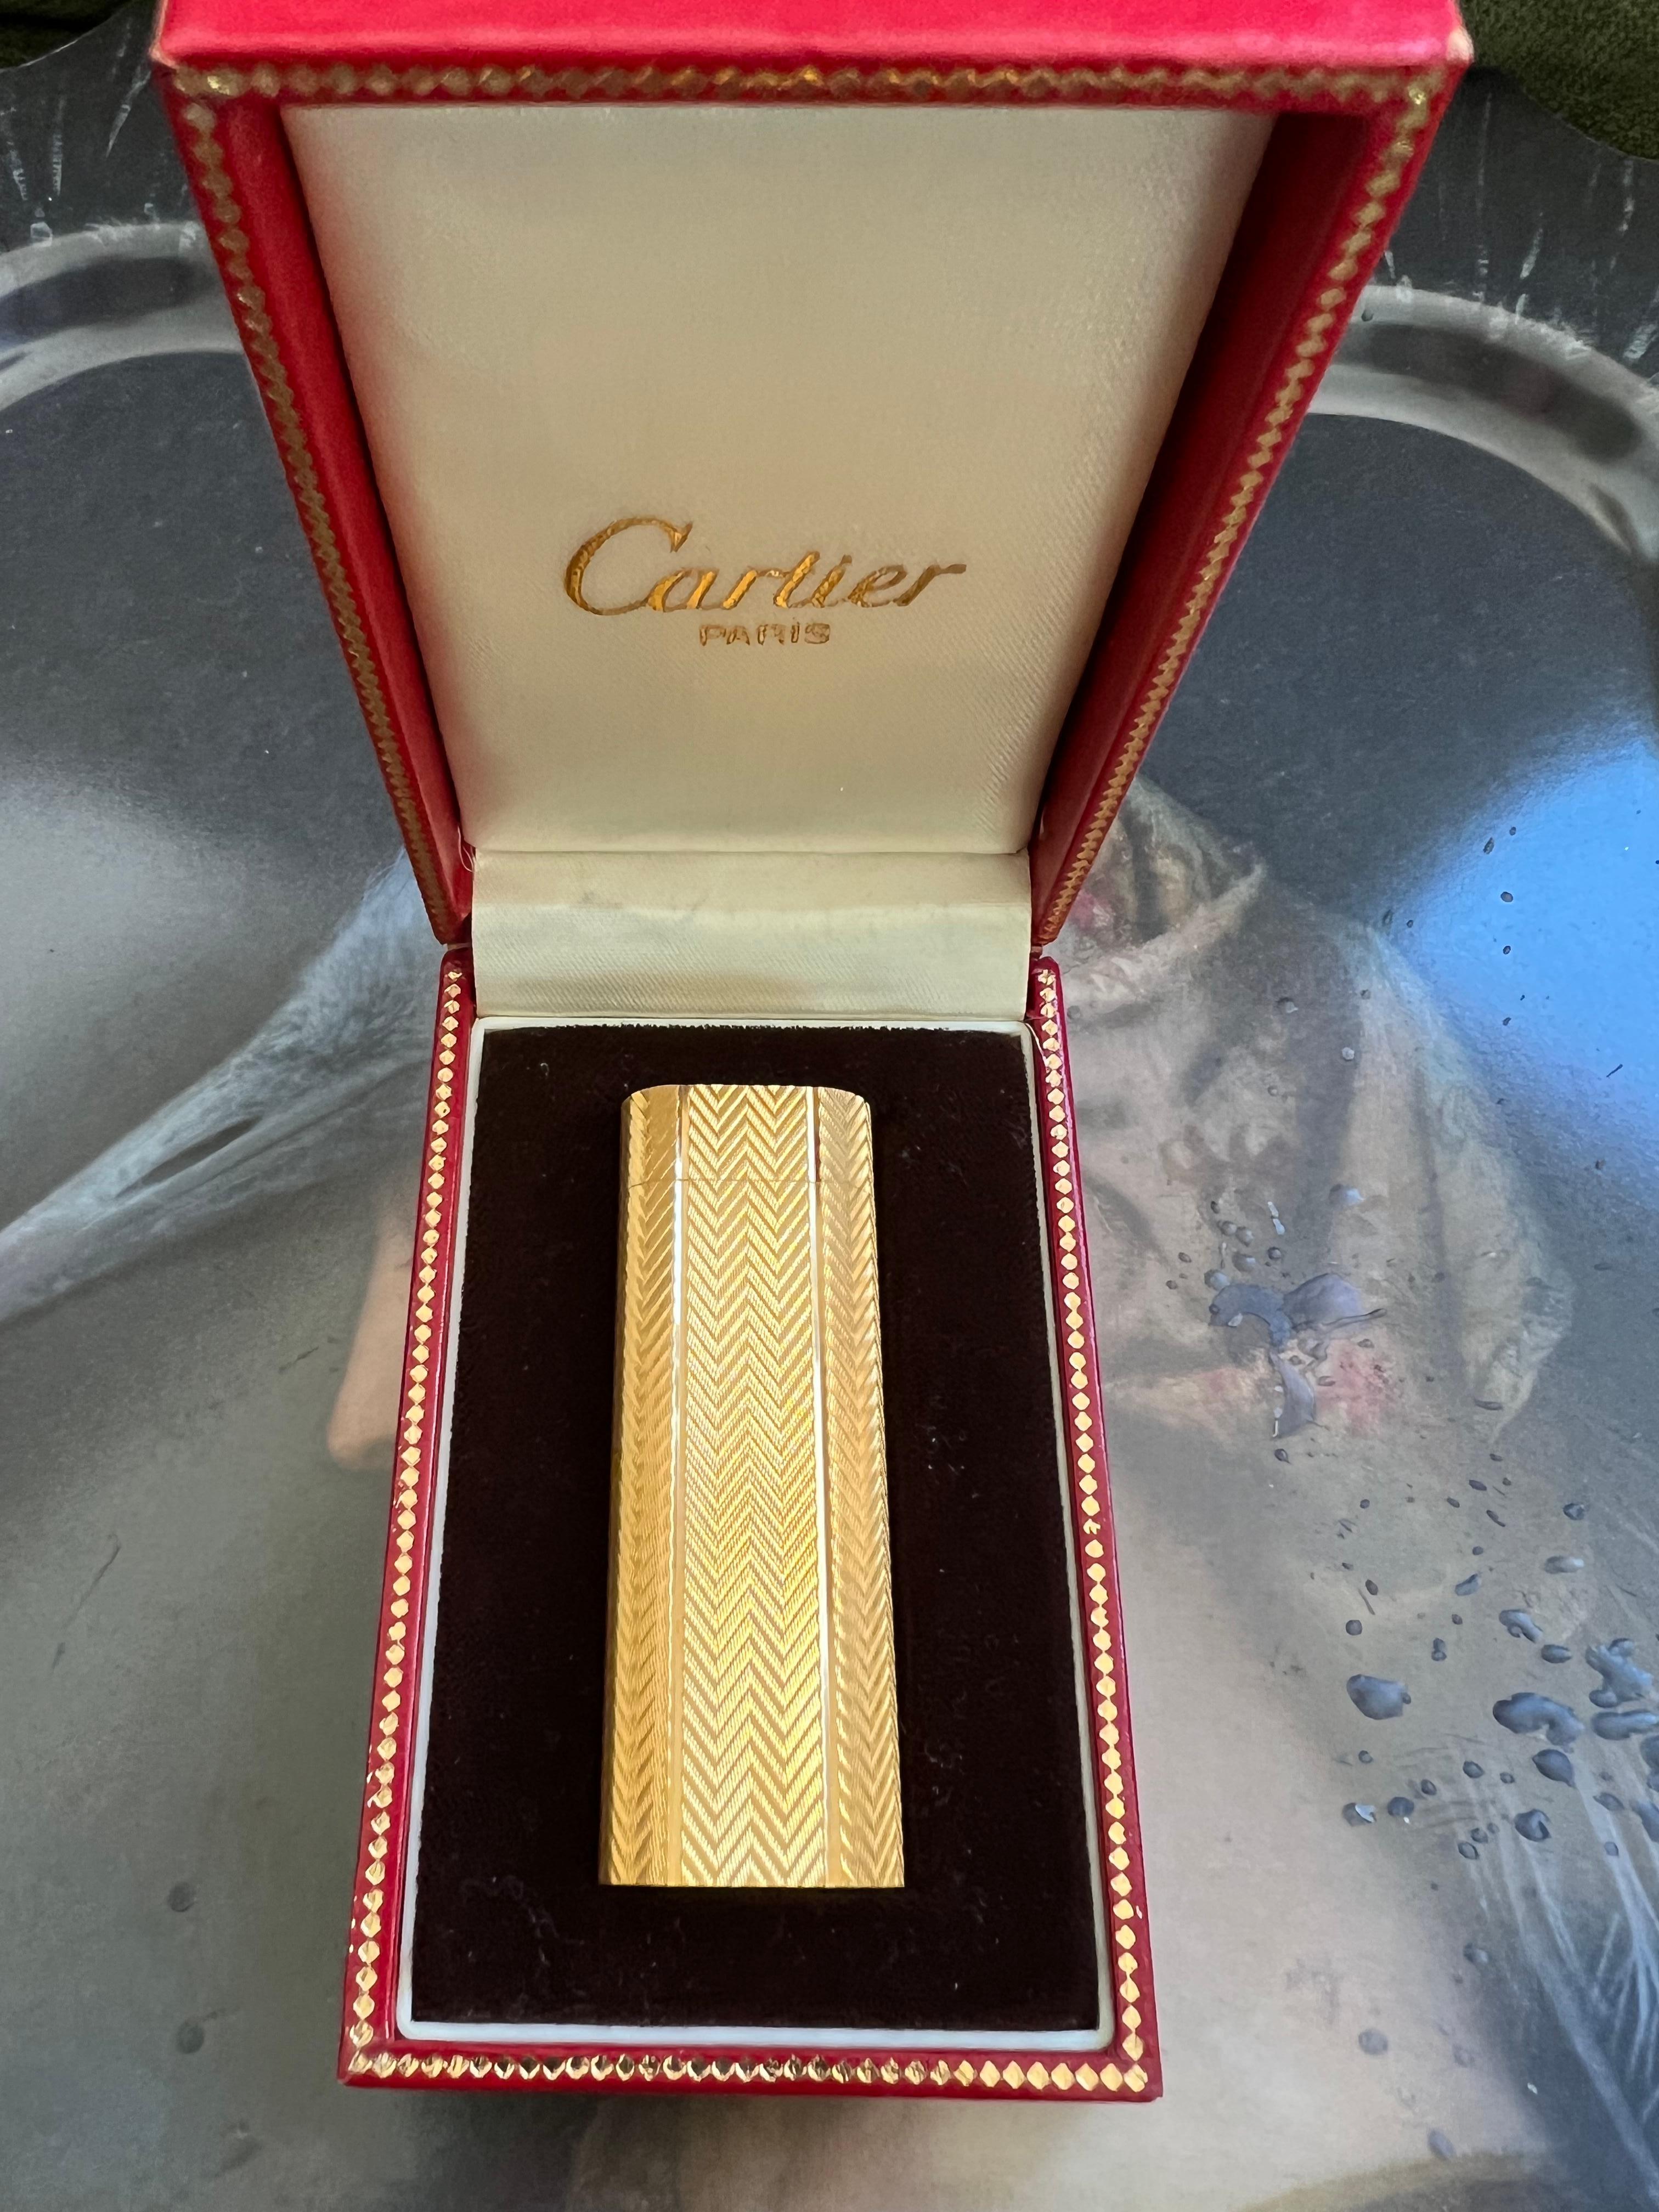 Les Must de Cartier Paris 18k Gold Plated Lighter 4